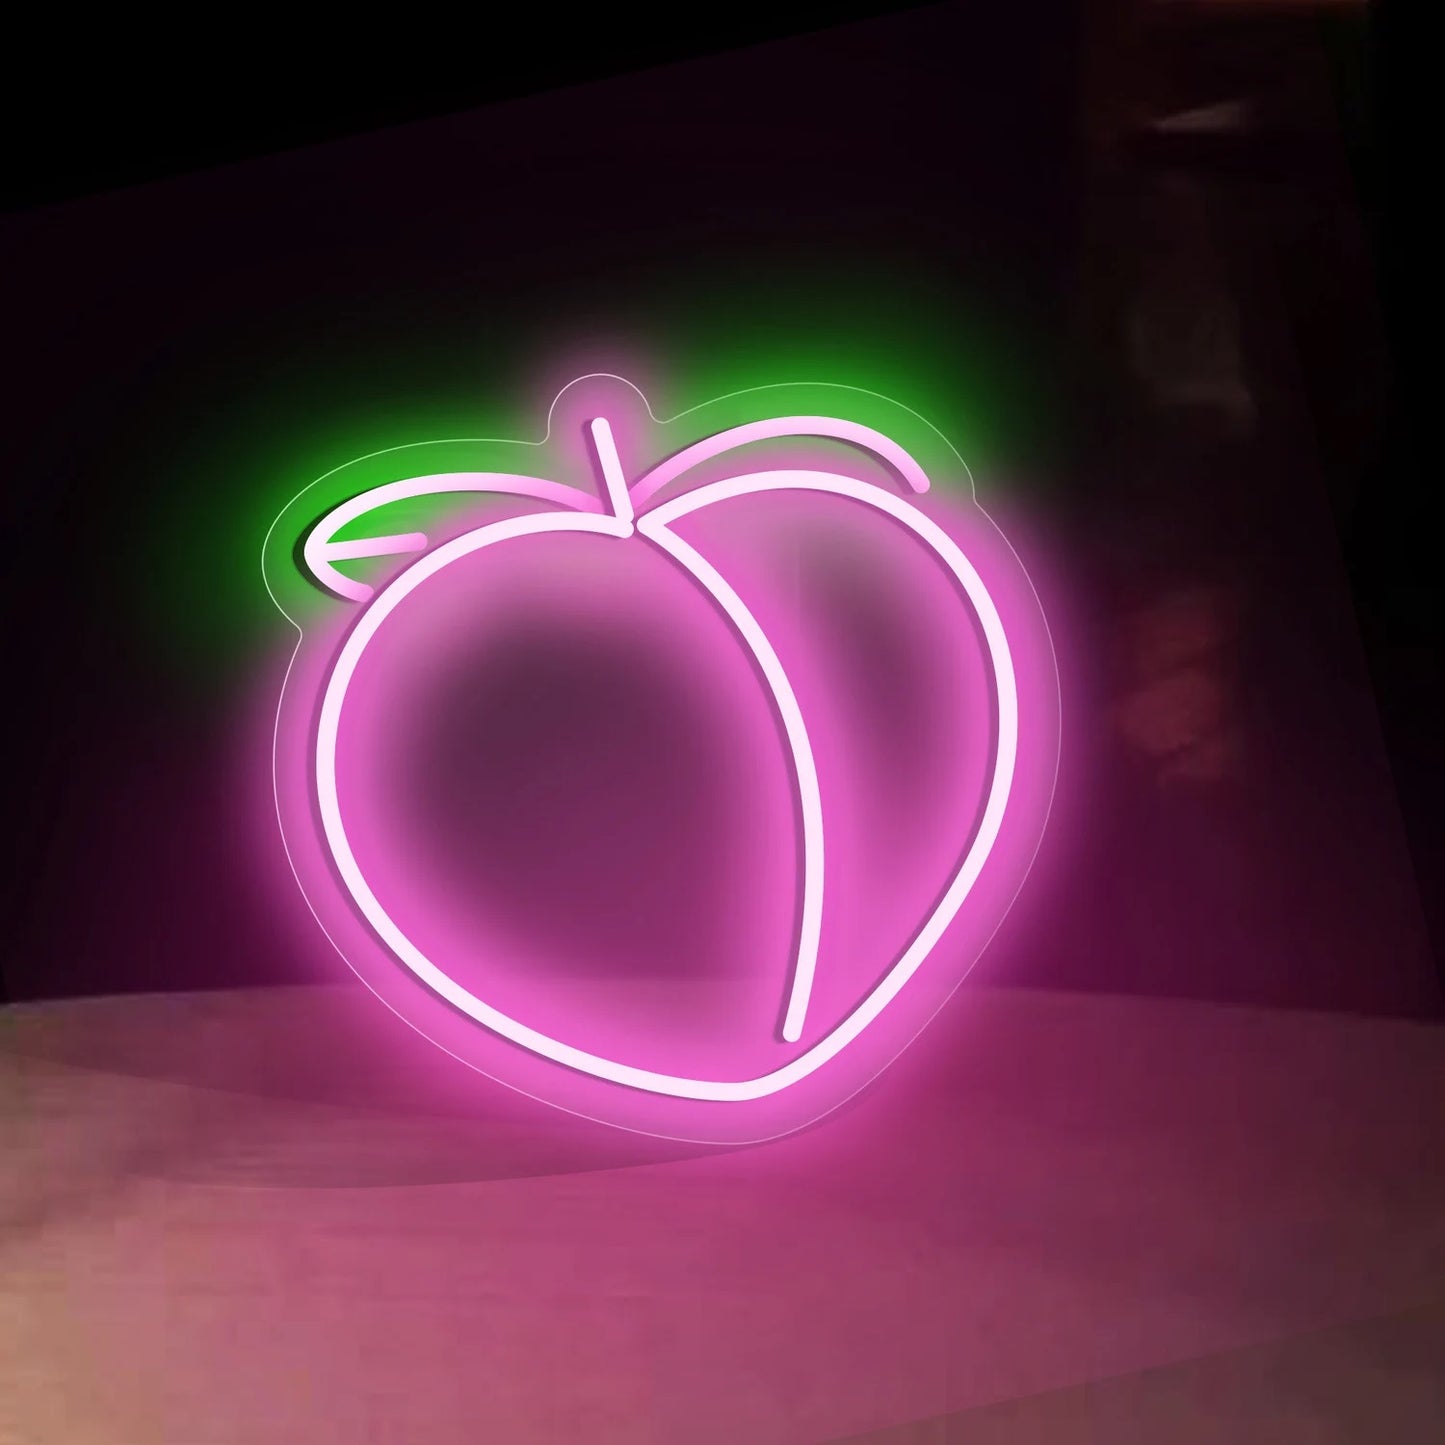 Peach Neon Sign (11.8 x 11.8 inch)